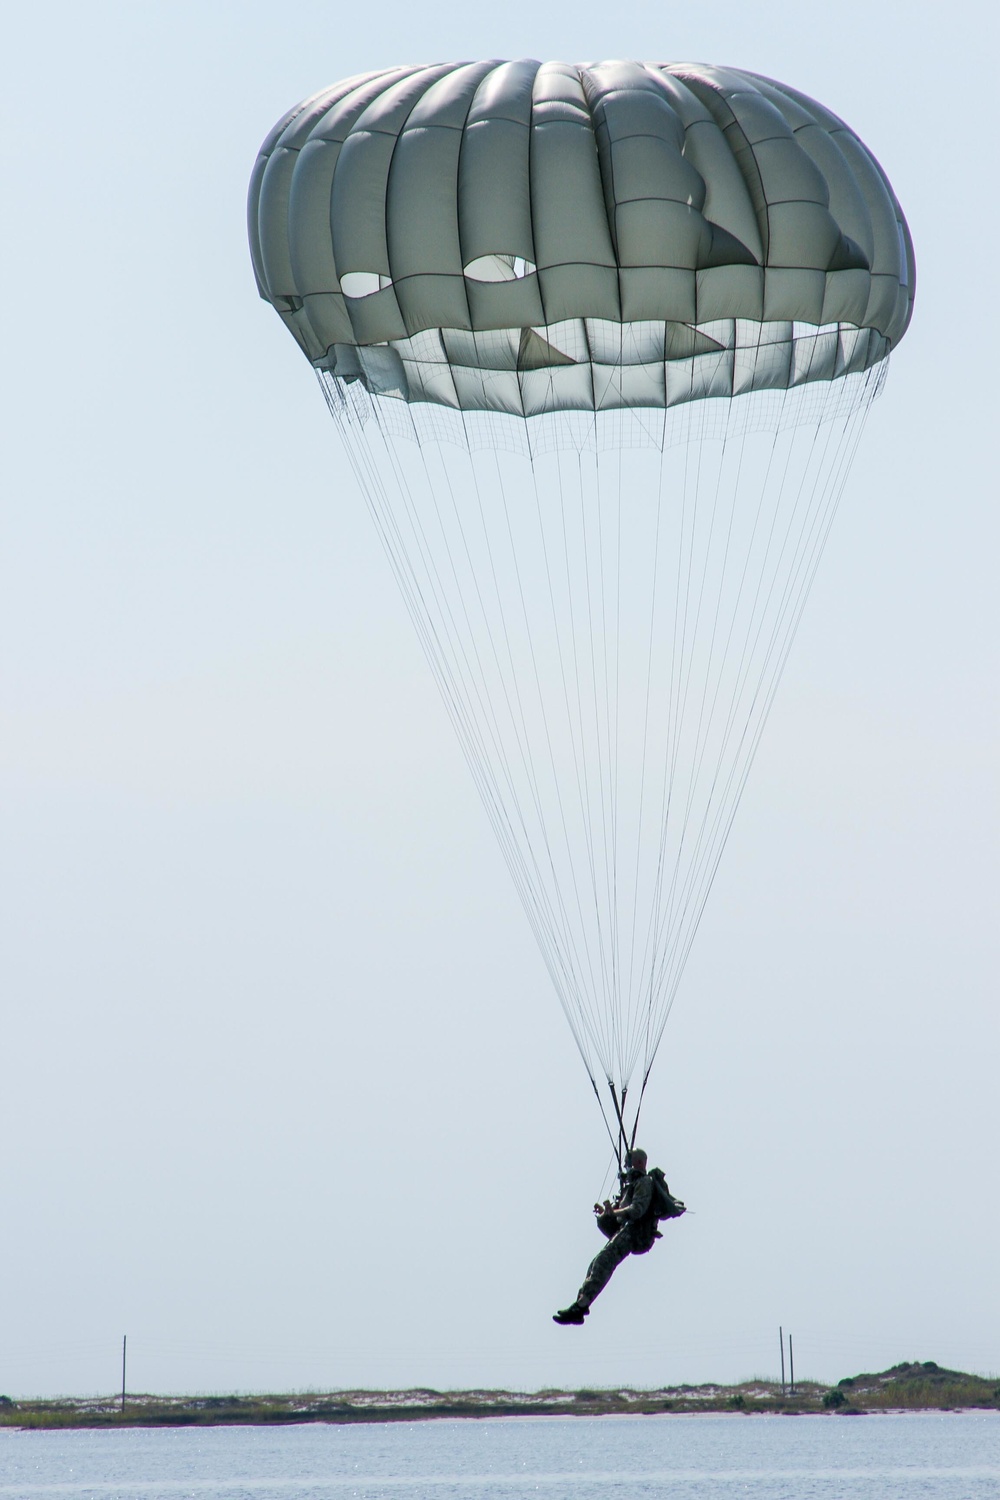 7th SFG(A) conducts parachute drop into Hurlburt bay